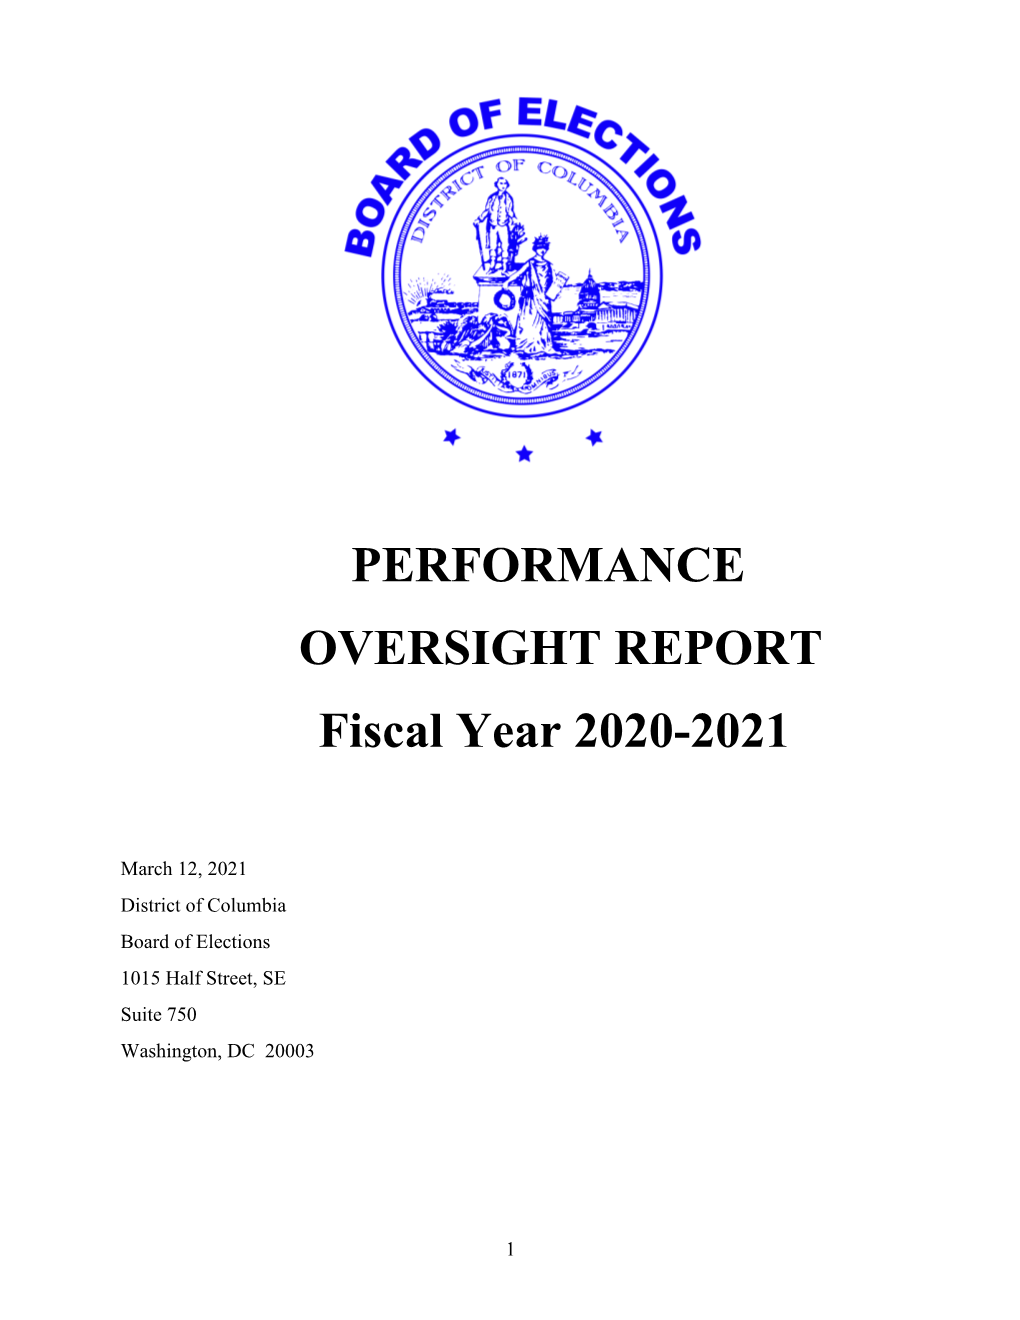 Performance Oversight Responses